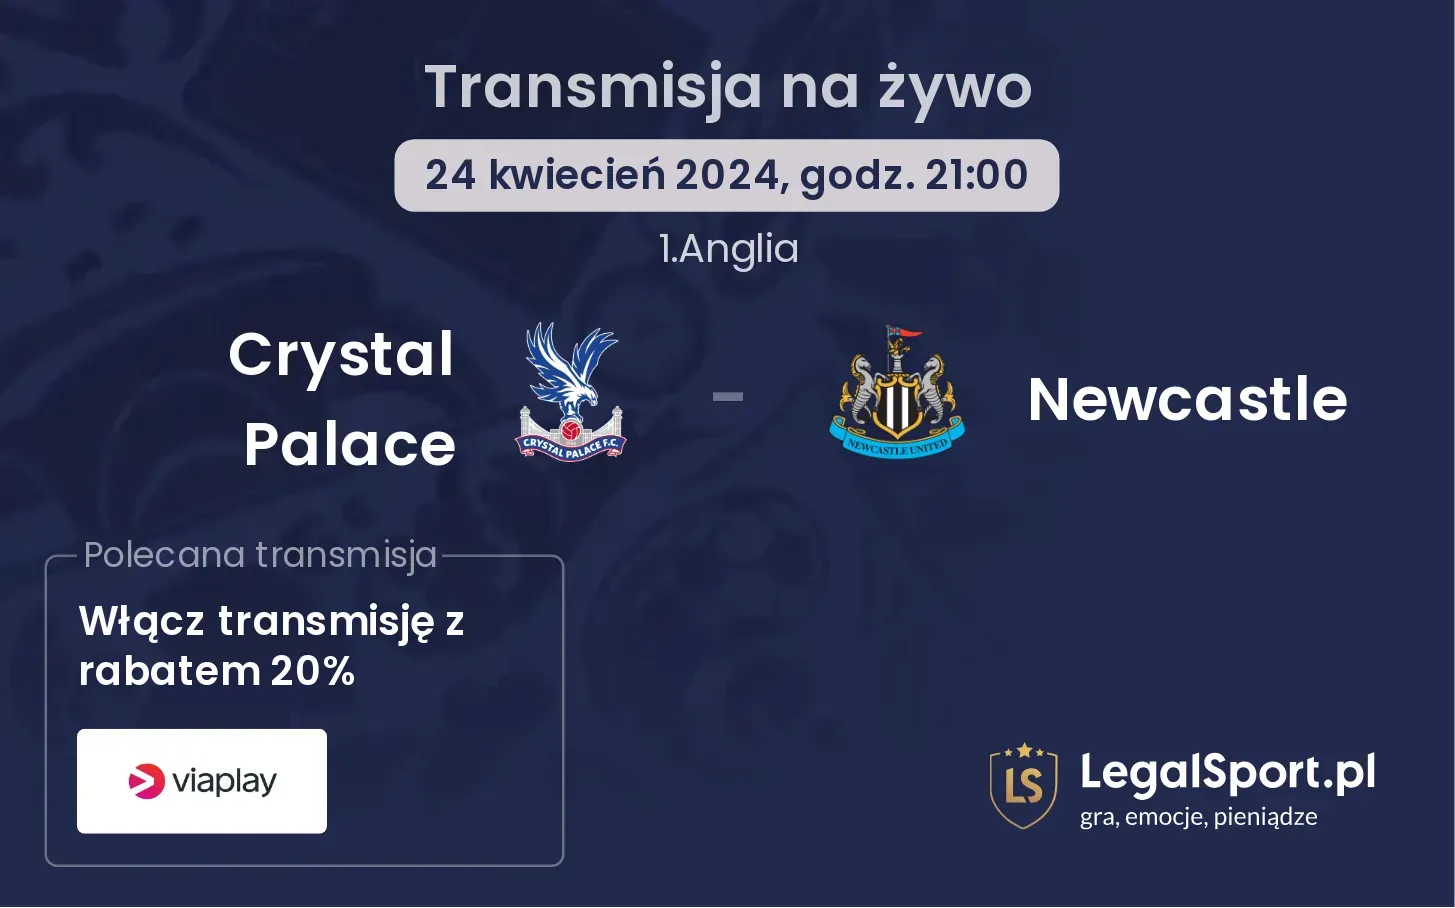 Crystal Palace - Newcastle transmisja na żywo